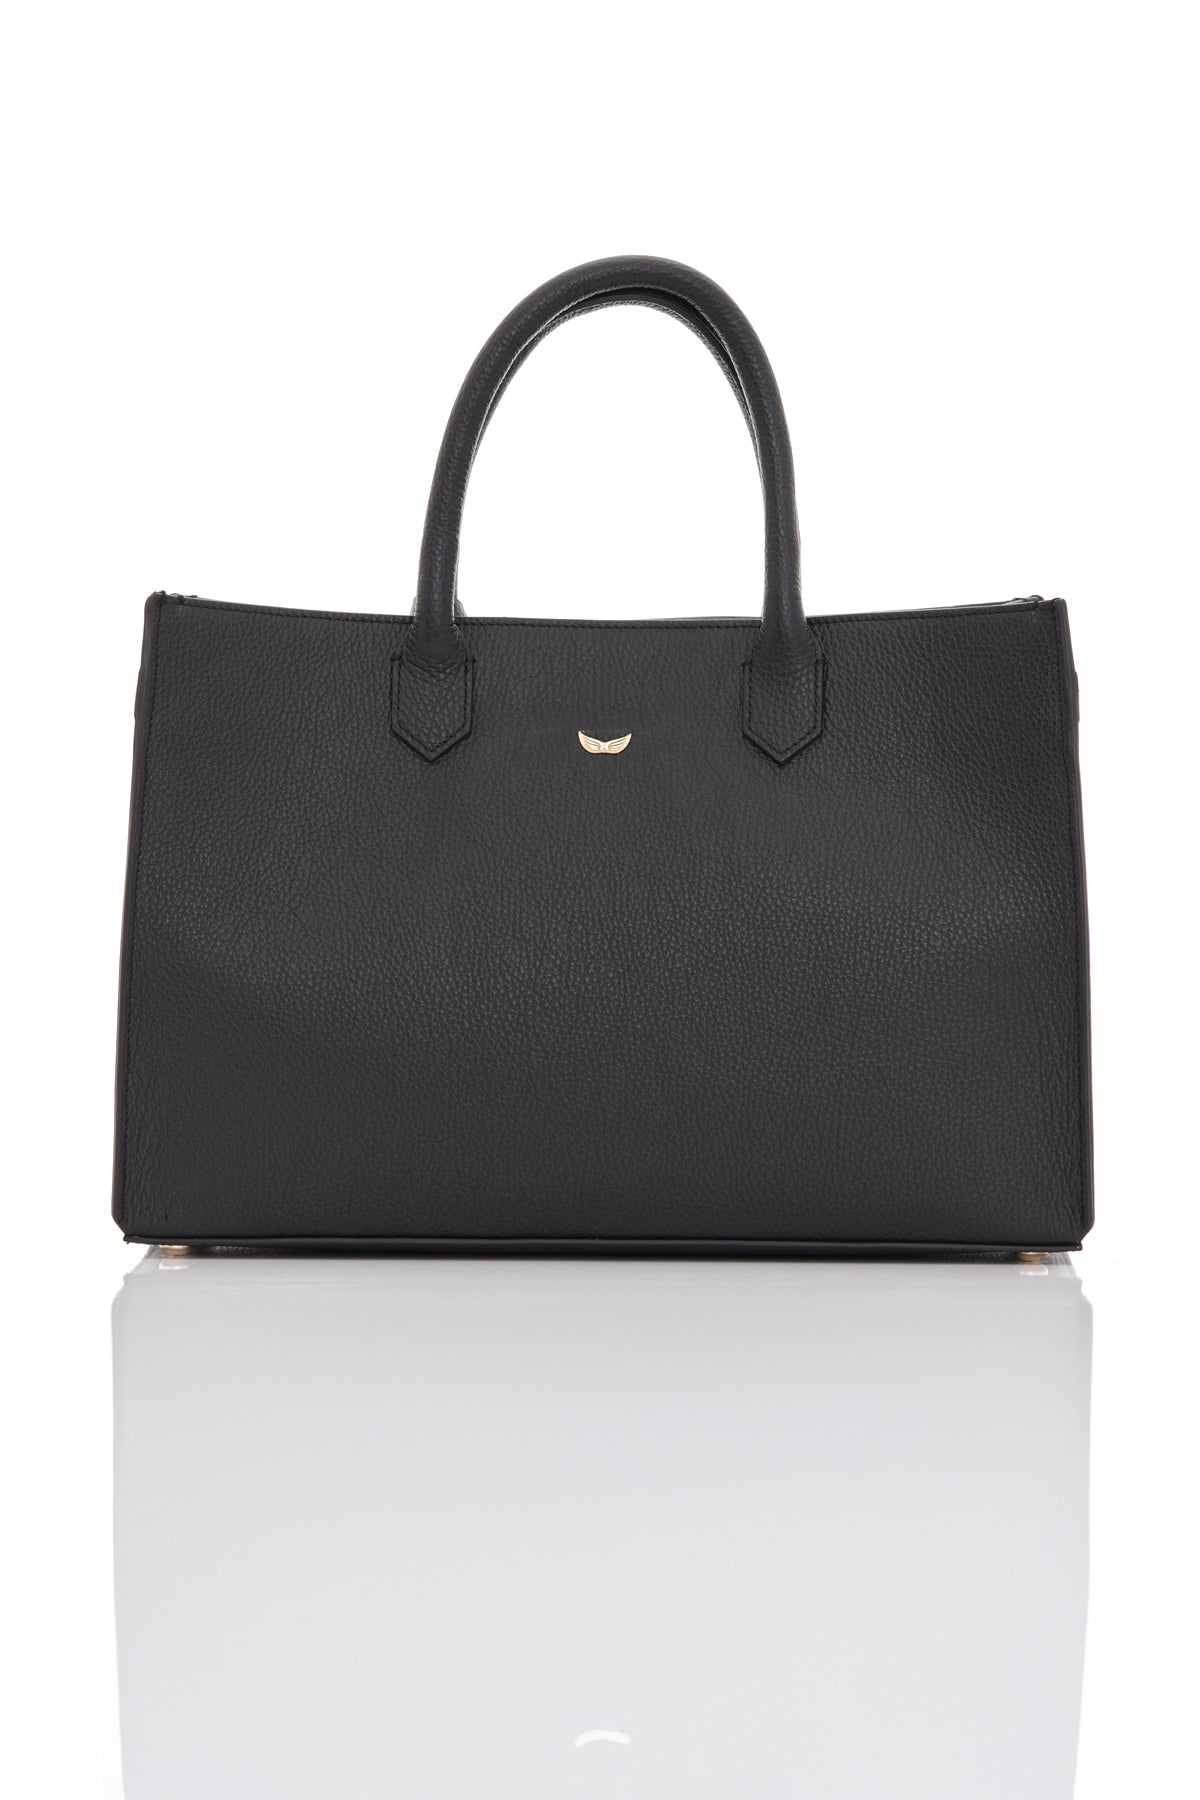 black ouroboros genuine leather women's tote bag back